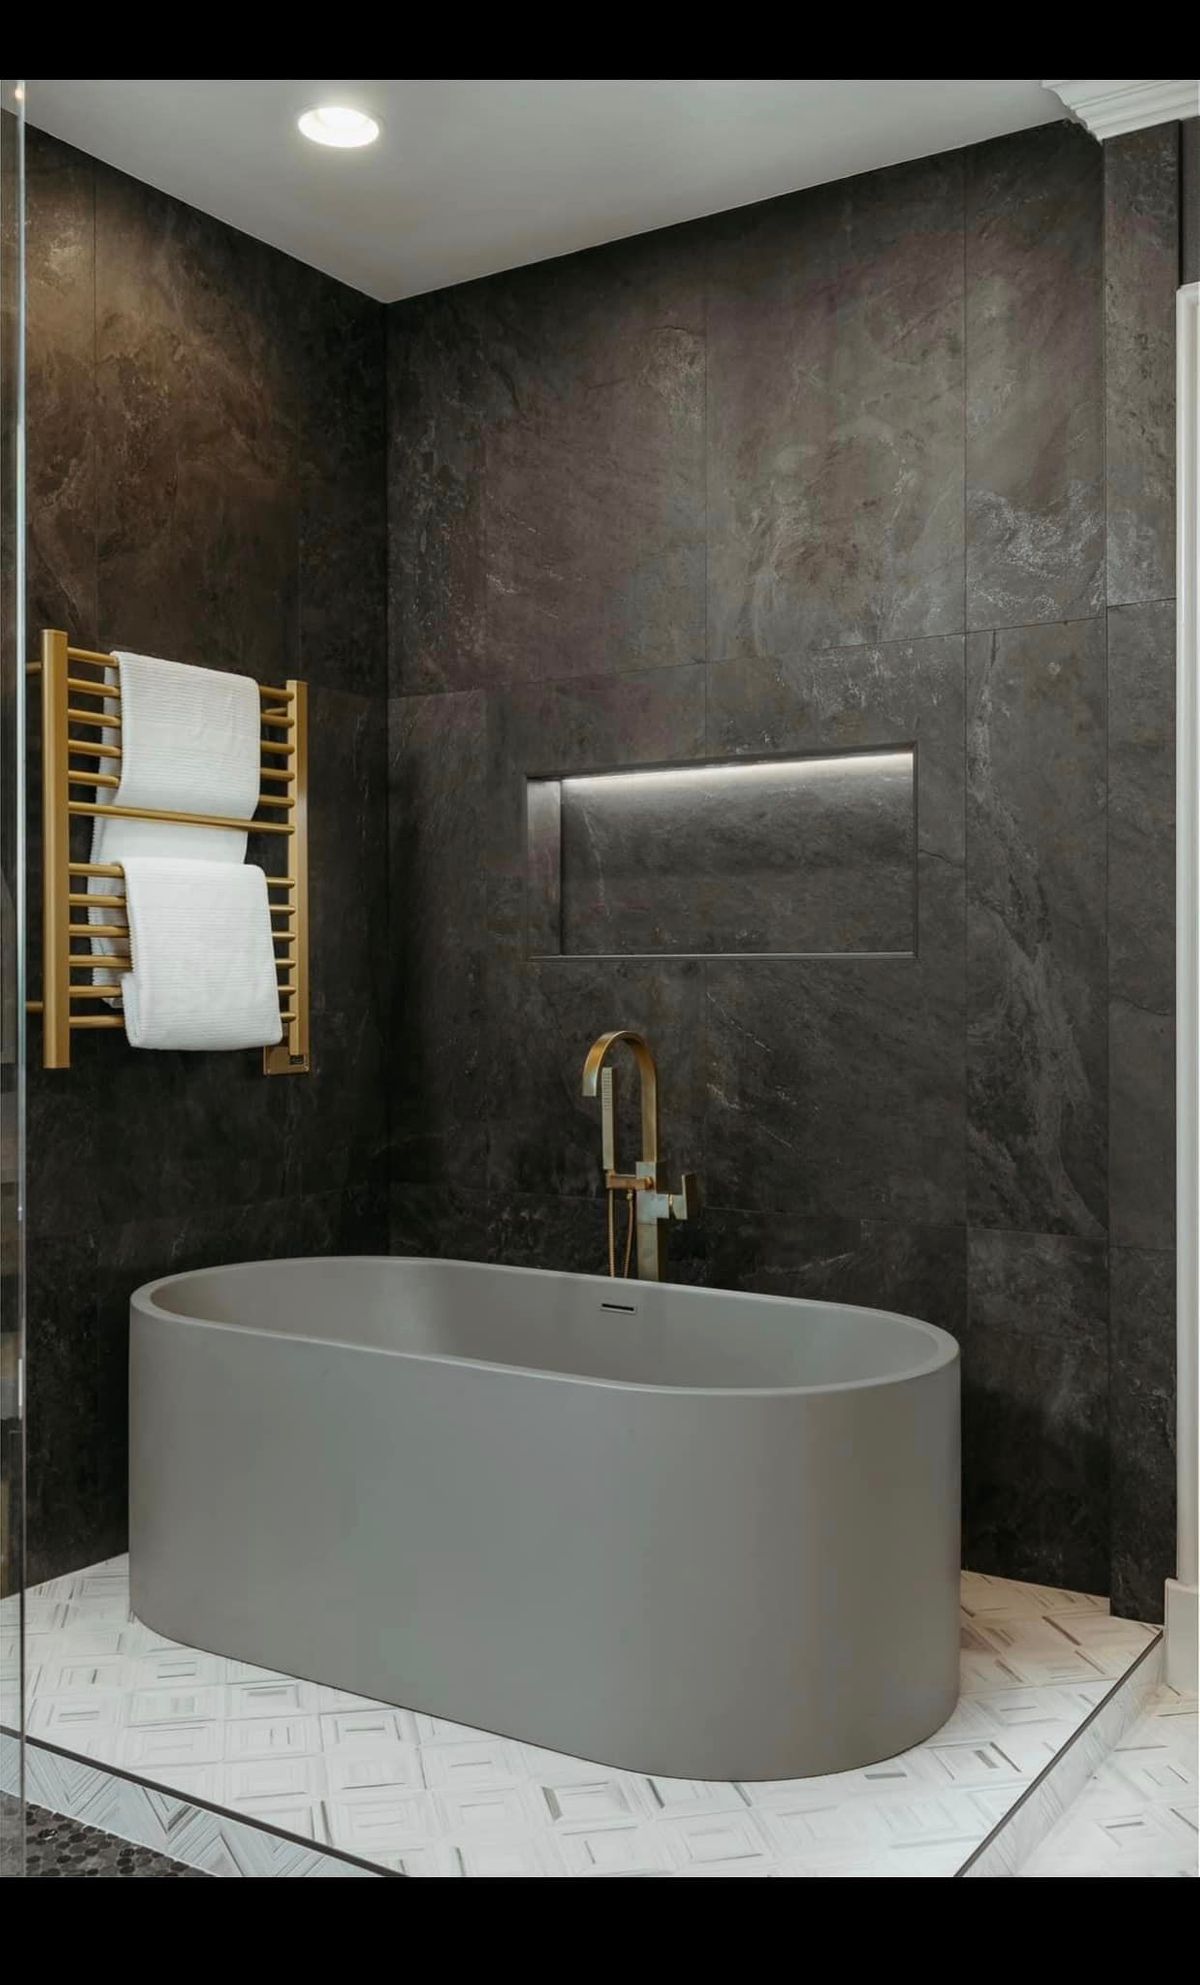 Modern Bathroom with Custom Illuminiche Niche, Freestanding Tub, and Gold Fixtures